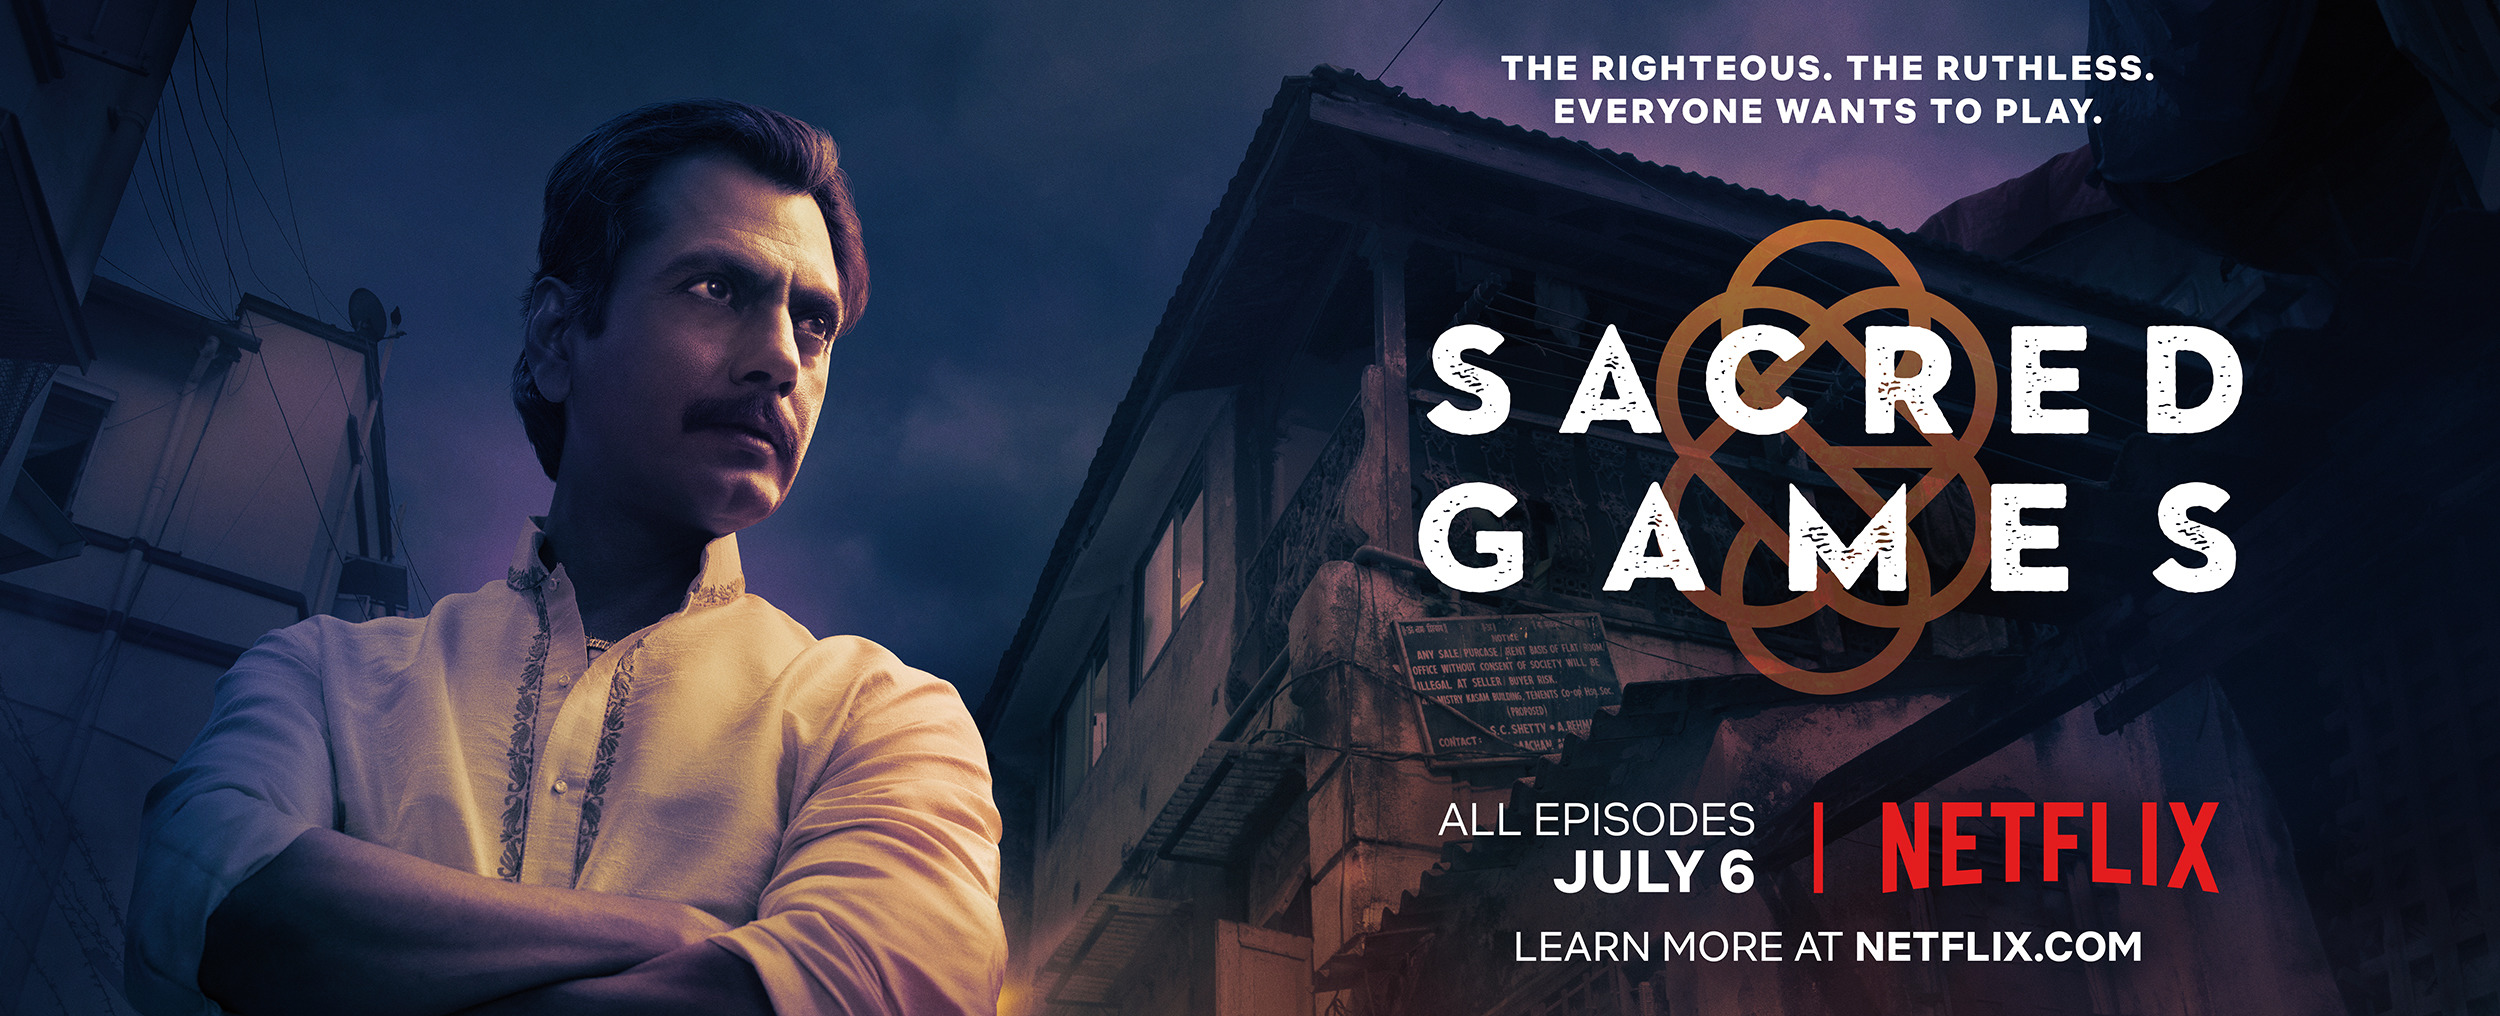 Mega Sized TV Poster Image for Sacred Games (#16 of 20)